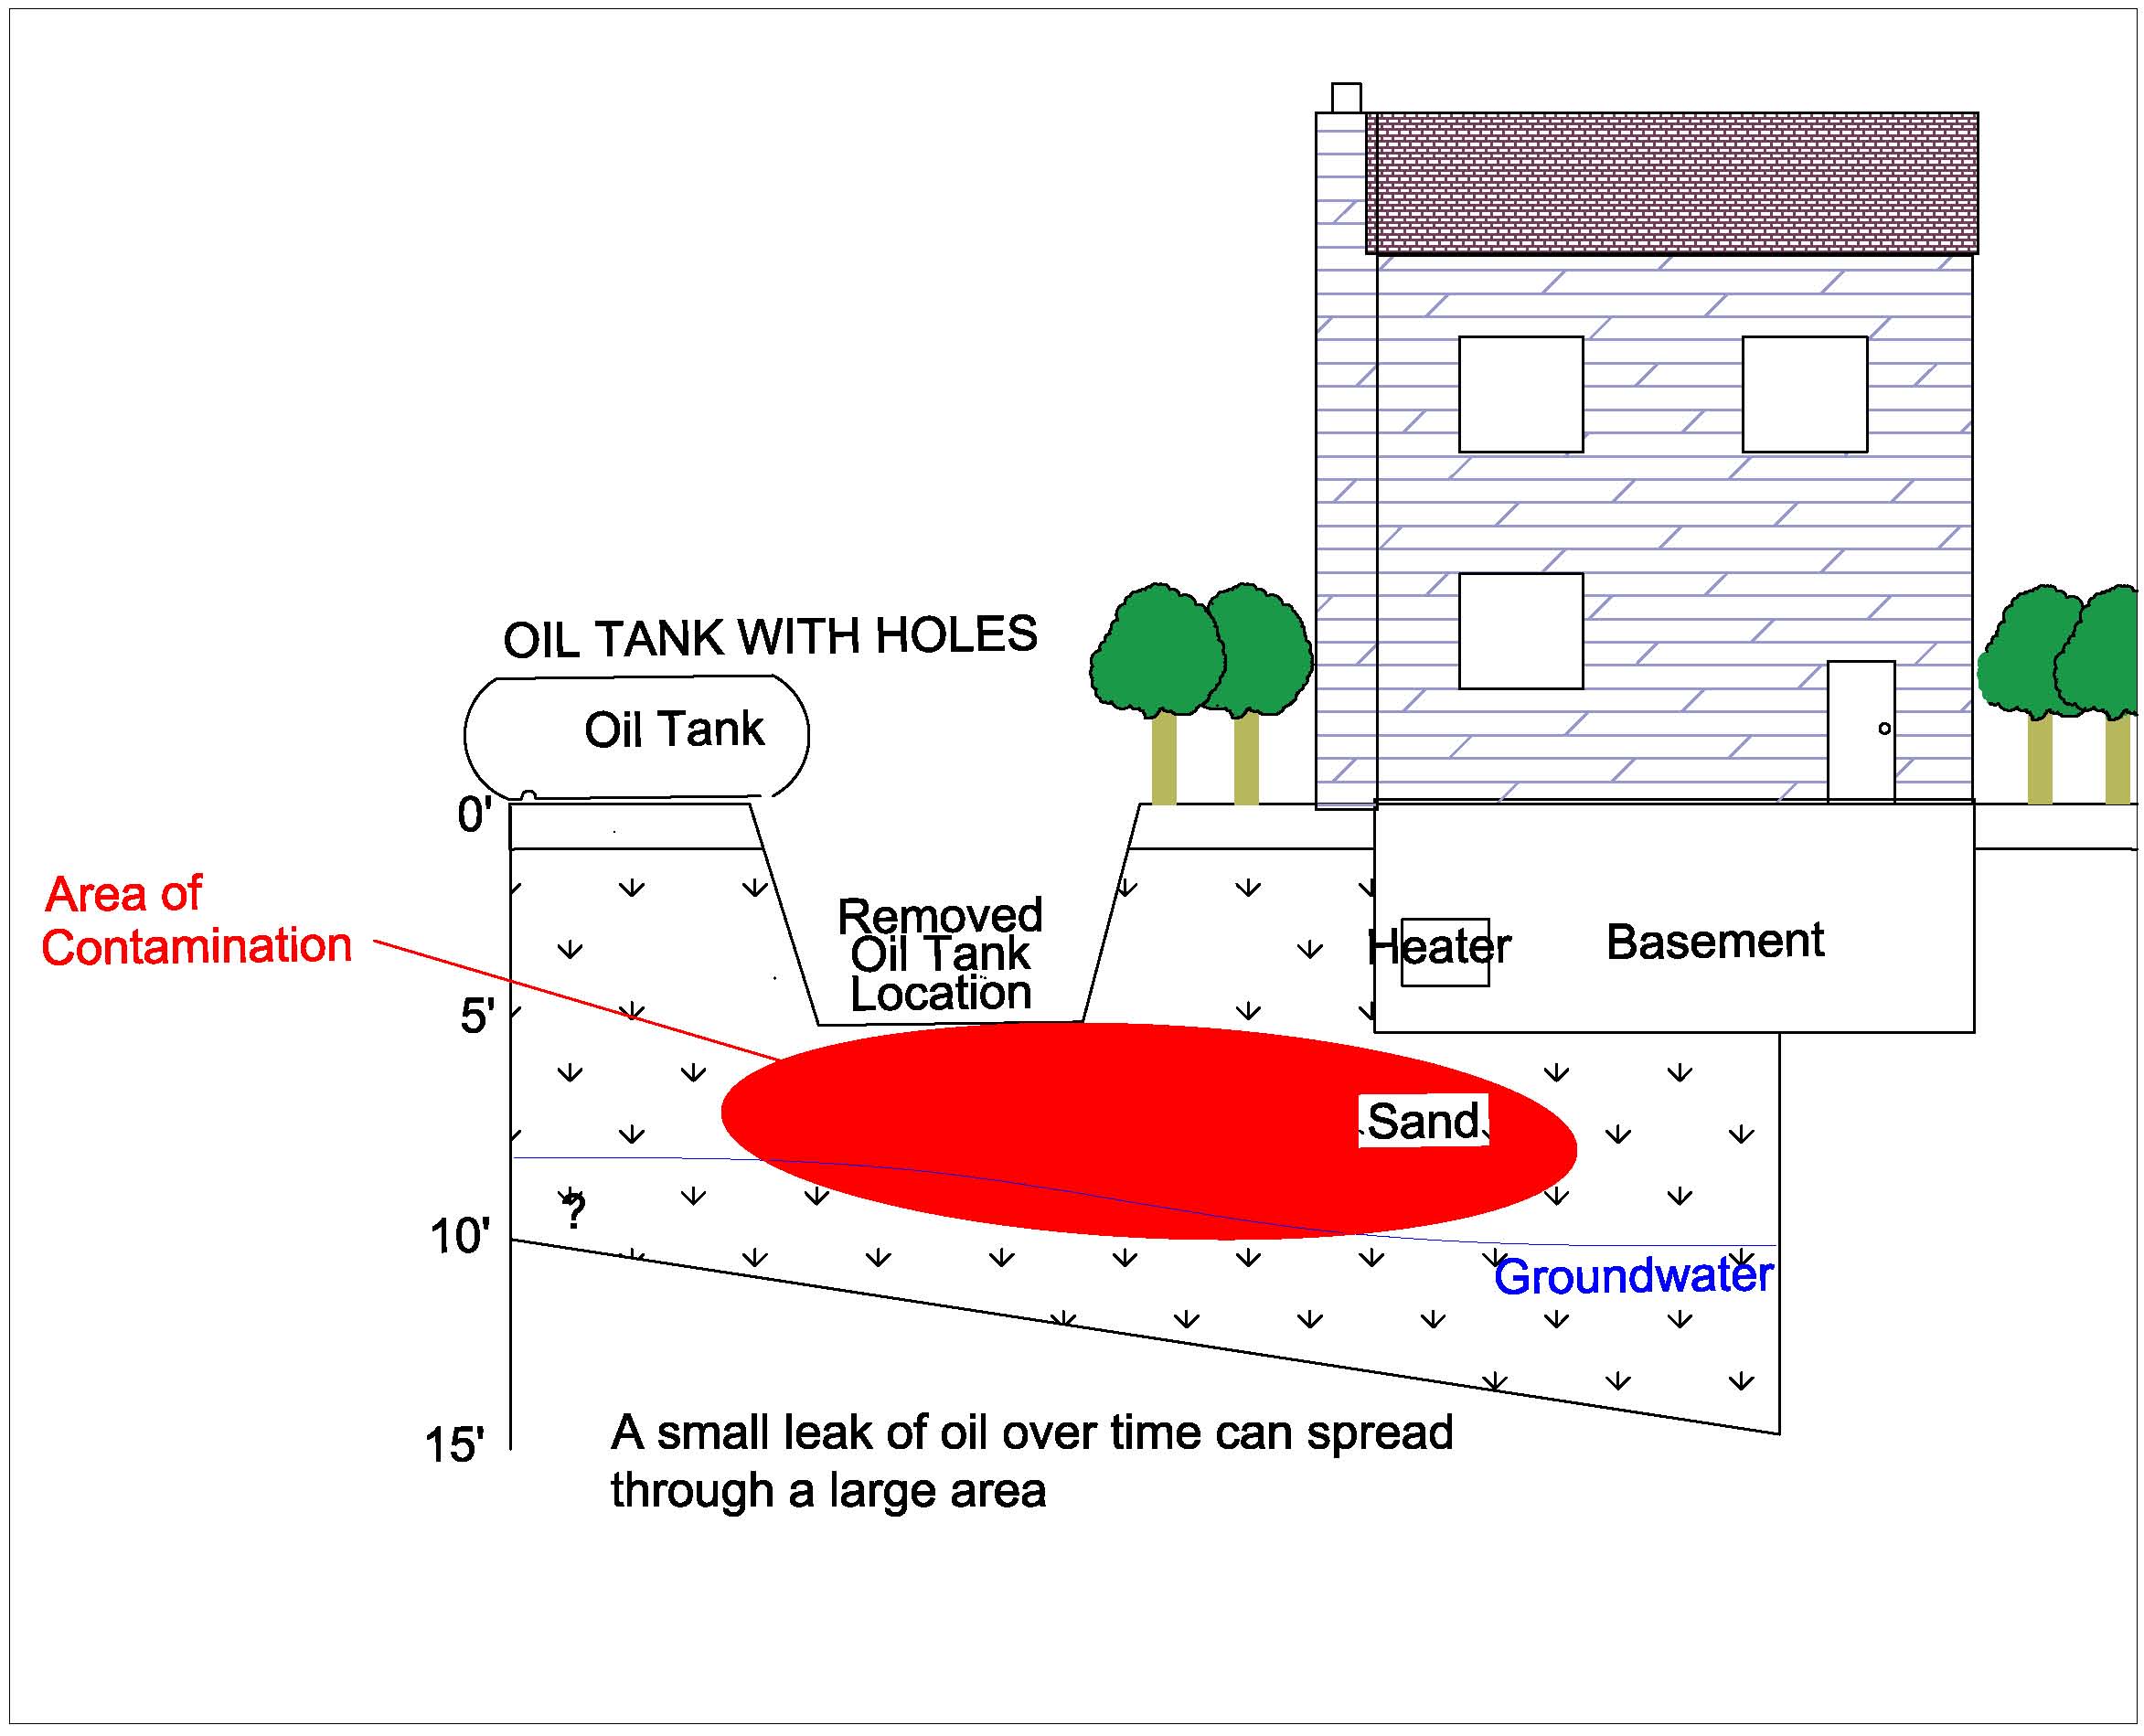 heating oil tank contamination plume